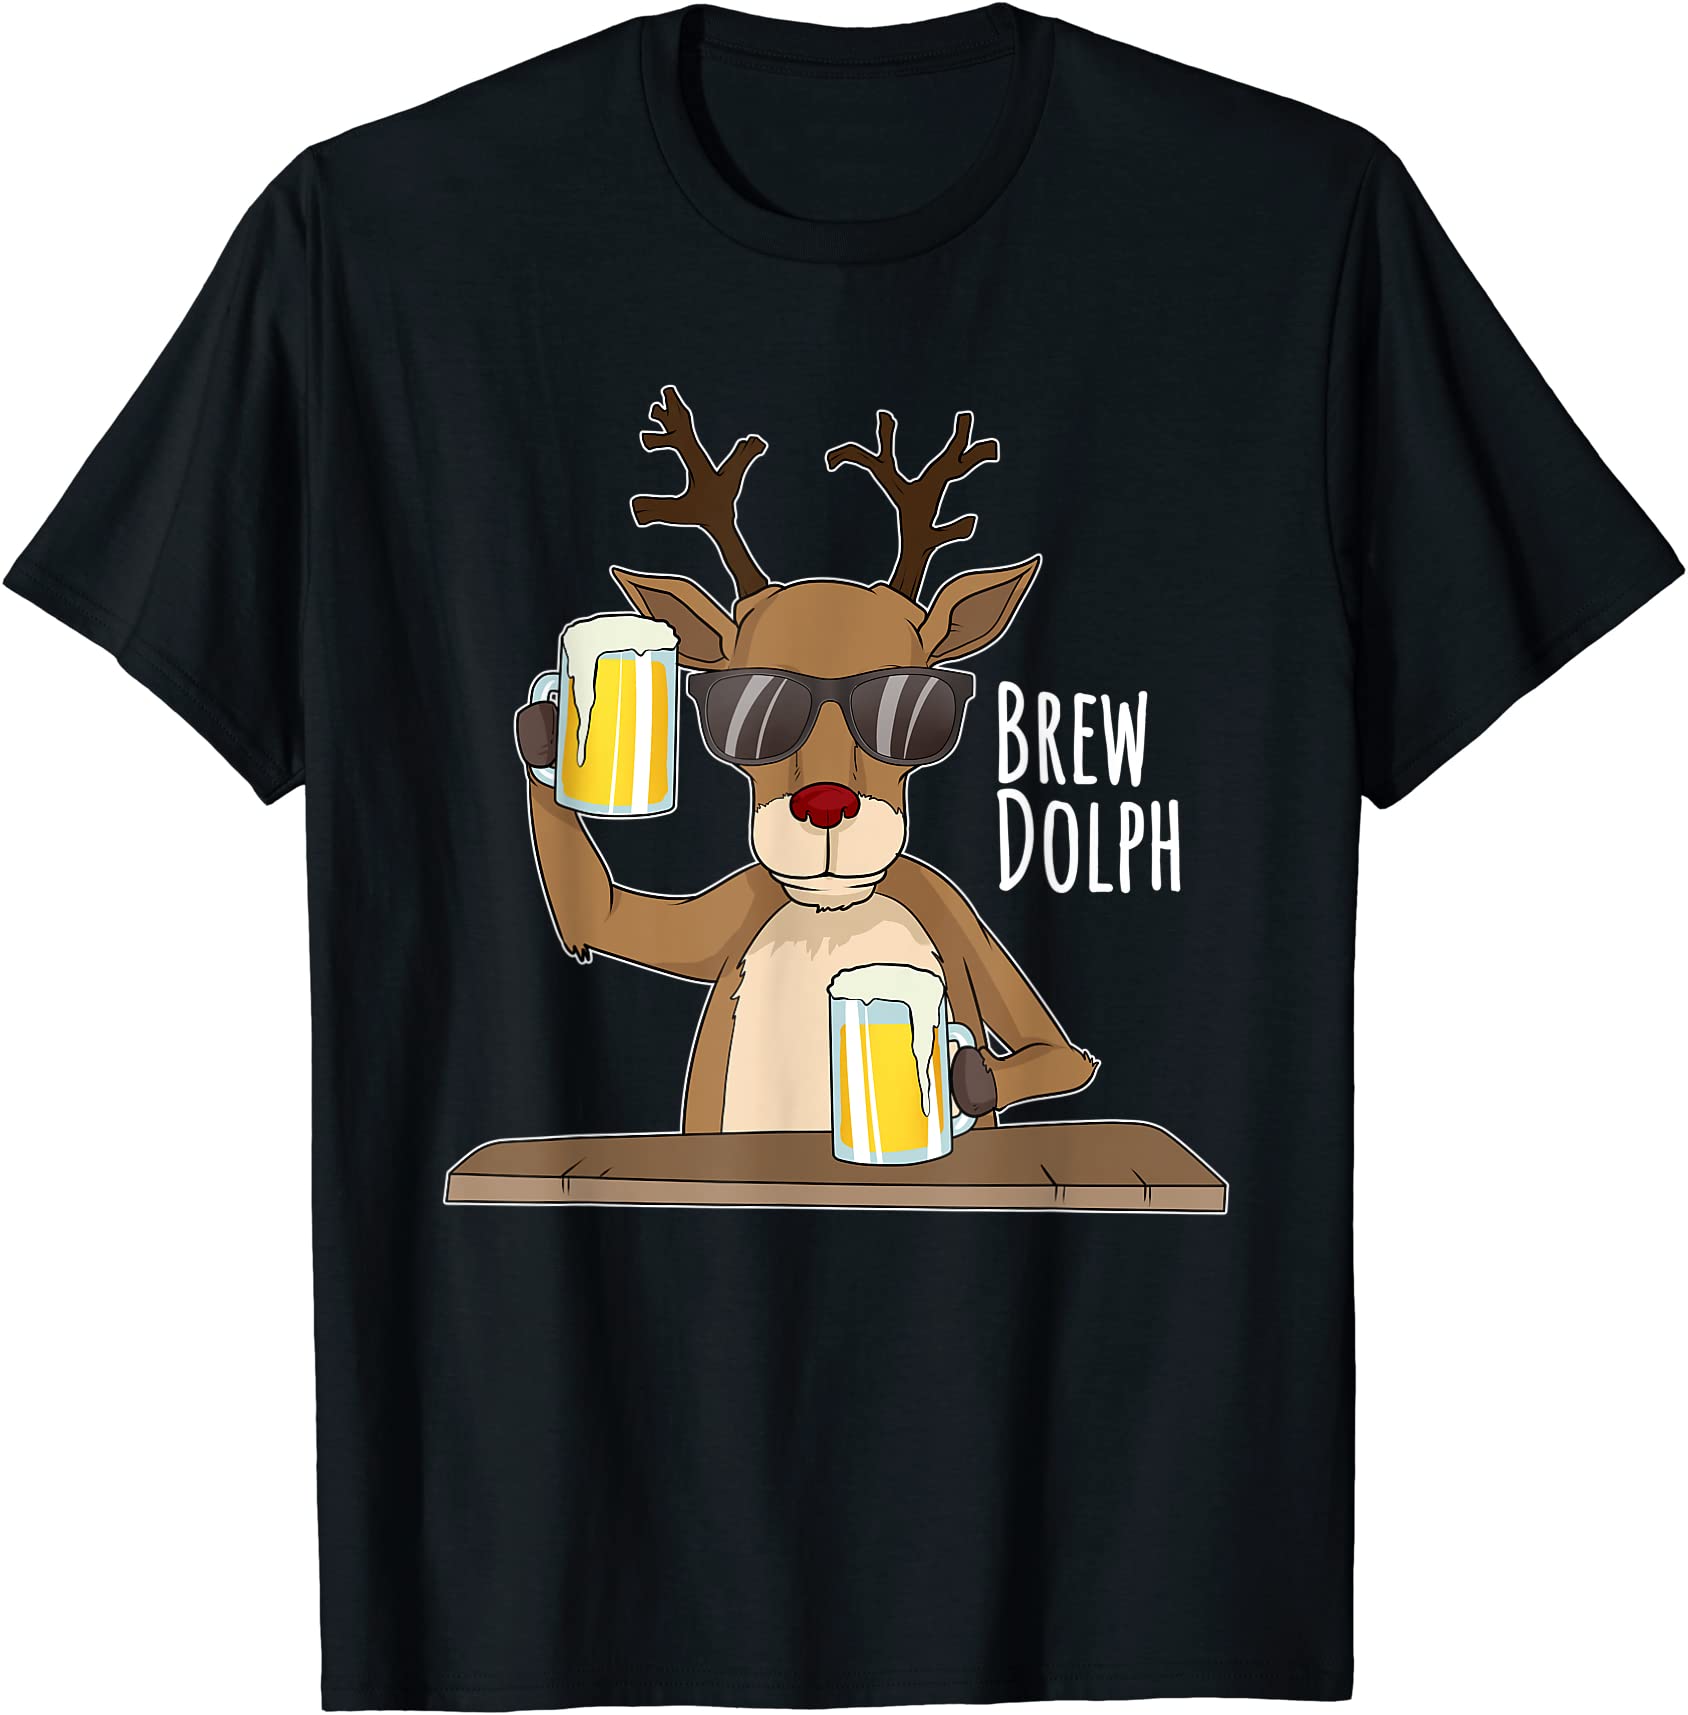 brew dolph funny rudolph christmas holiday t shirt men - Buy t-shirt ...